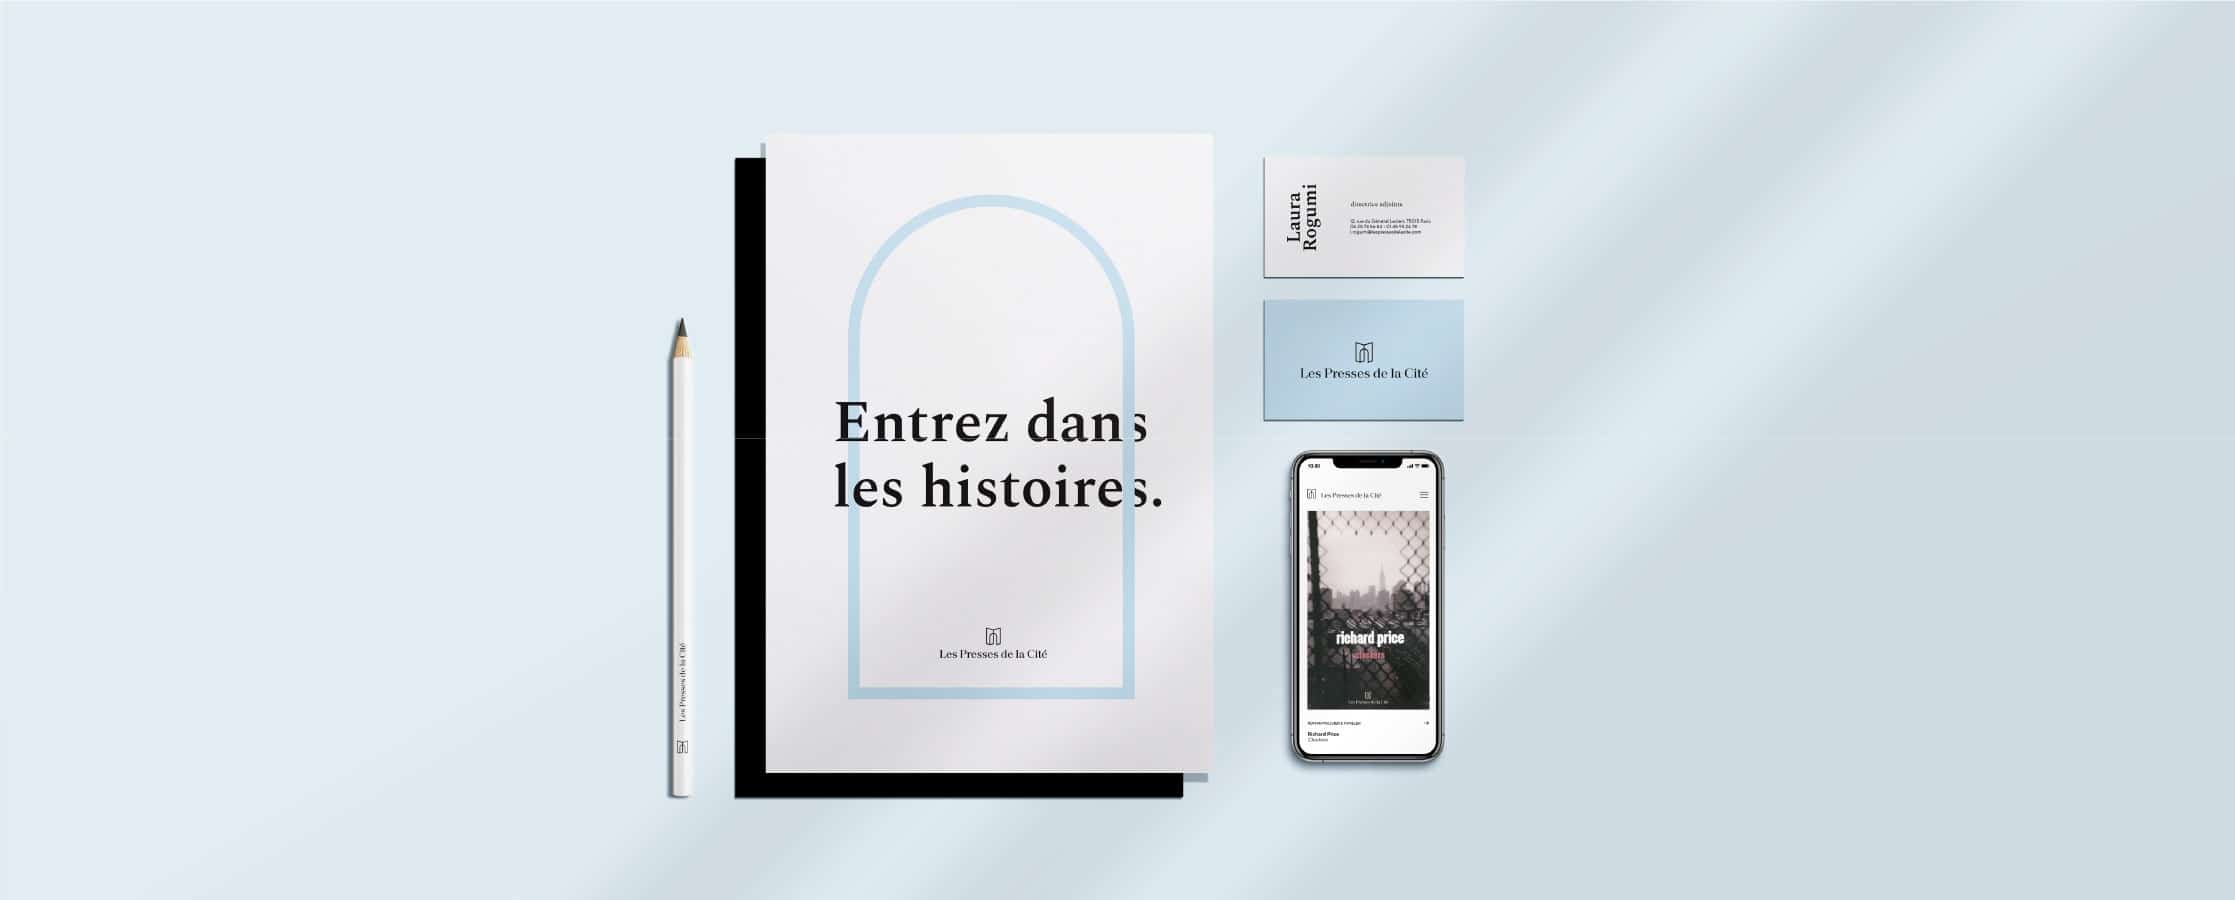 Agence branding pack design Paris - Pulp design